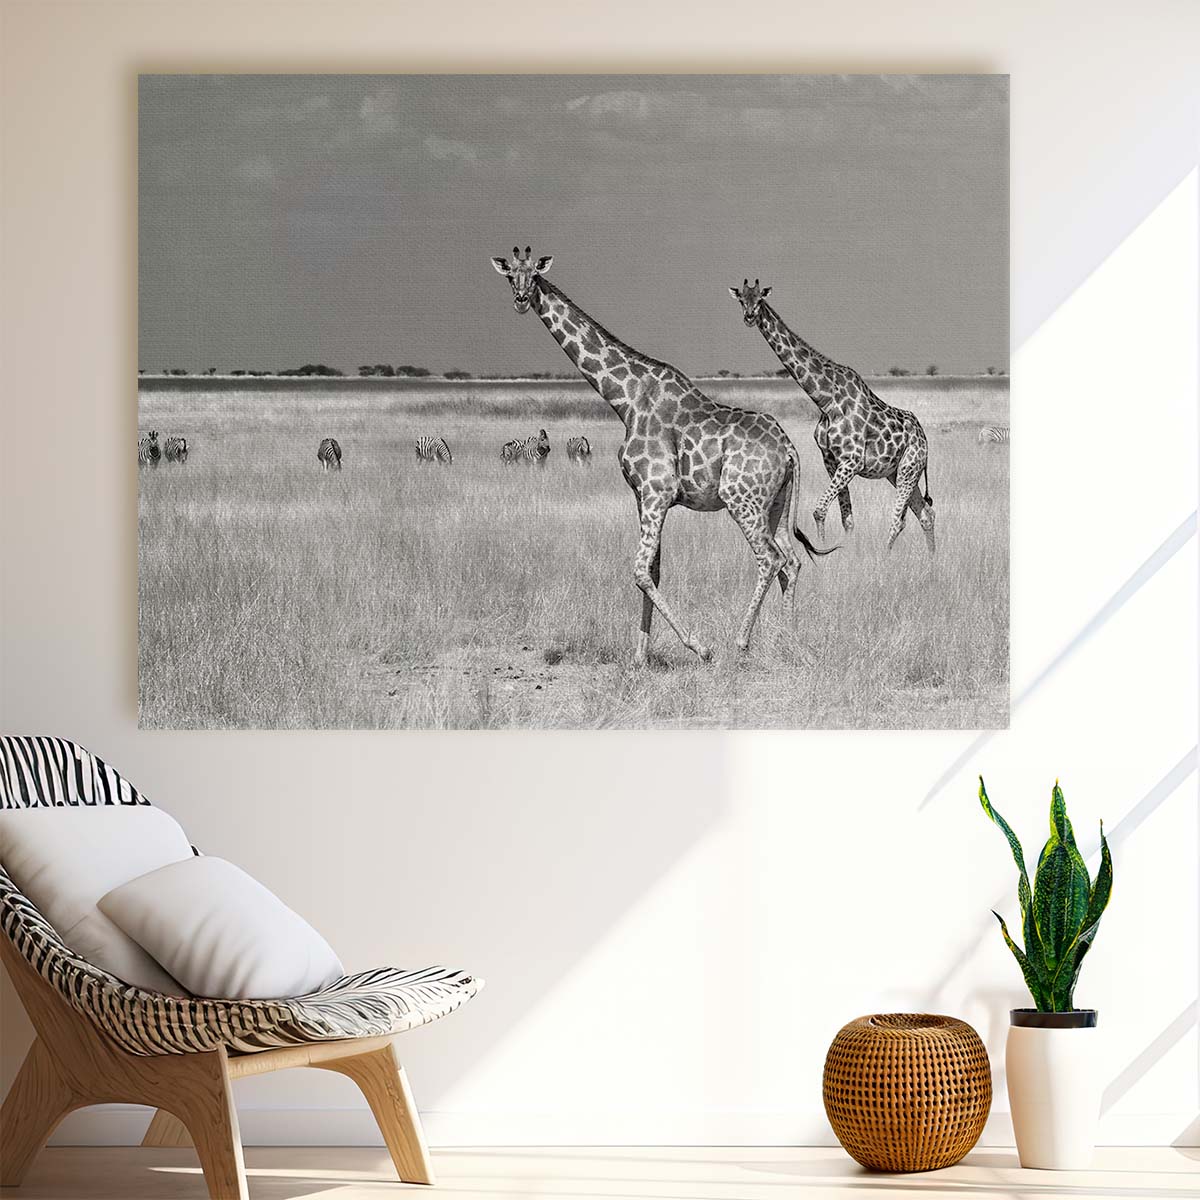 Safari Duo Monochrome Giraffe & Zebra Wall Art by Luxuriance Designs. Made in USA.